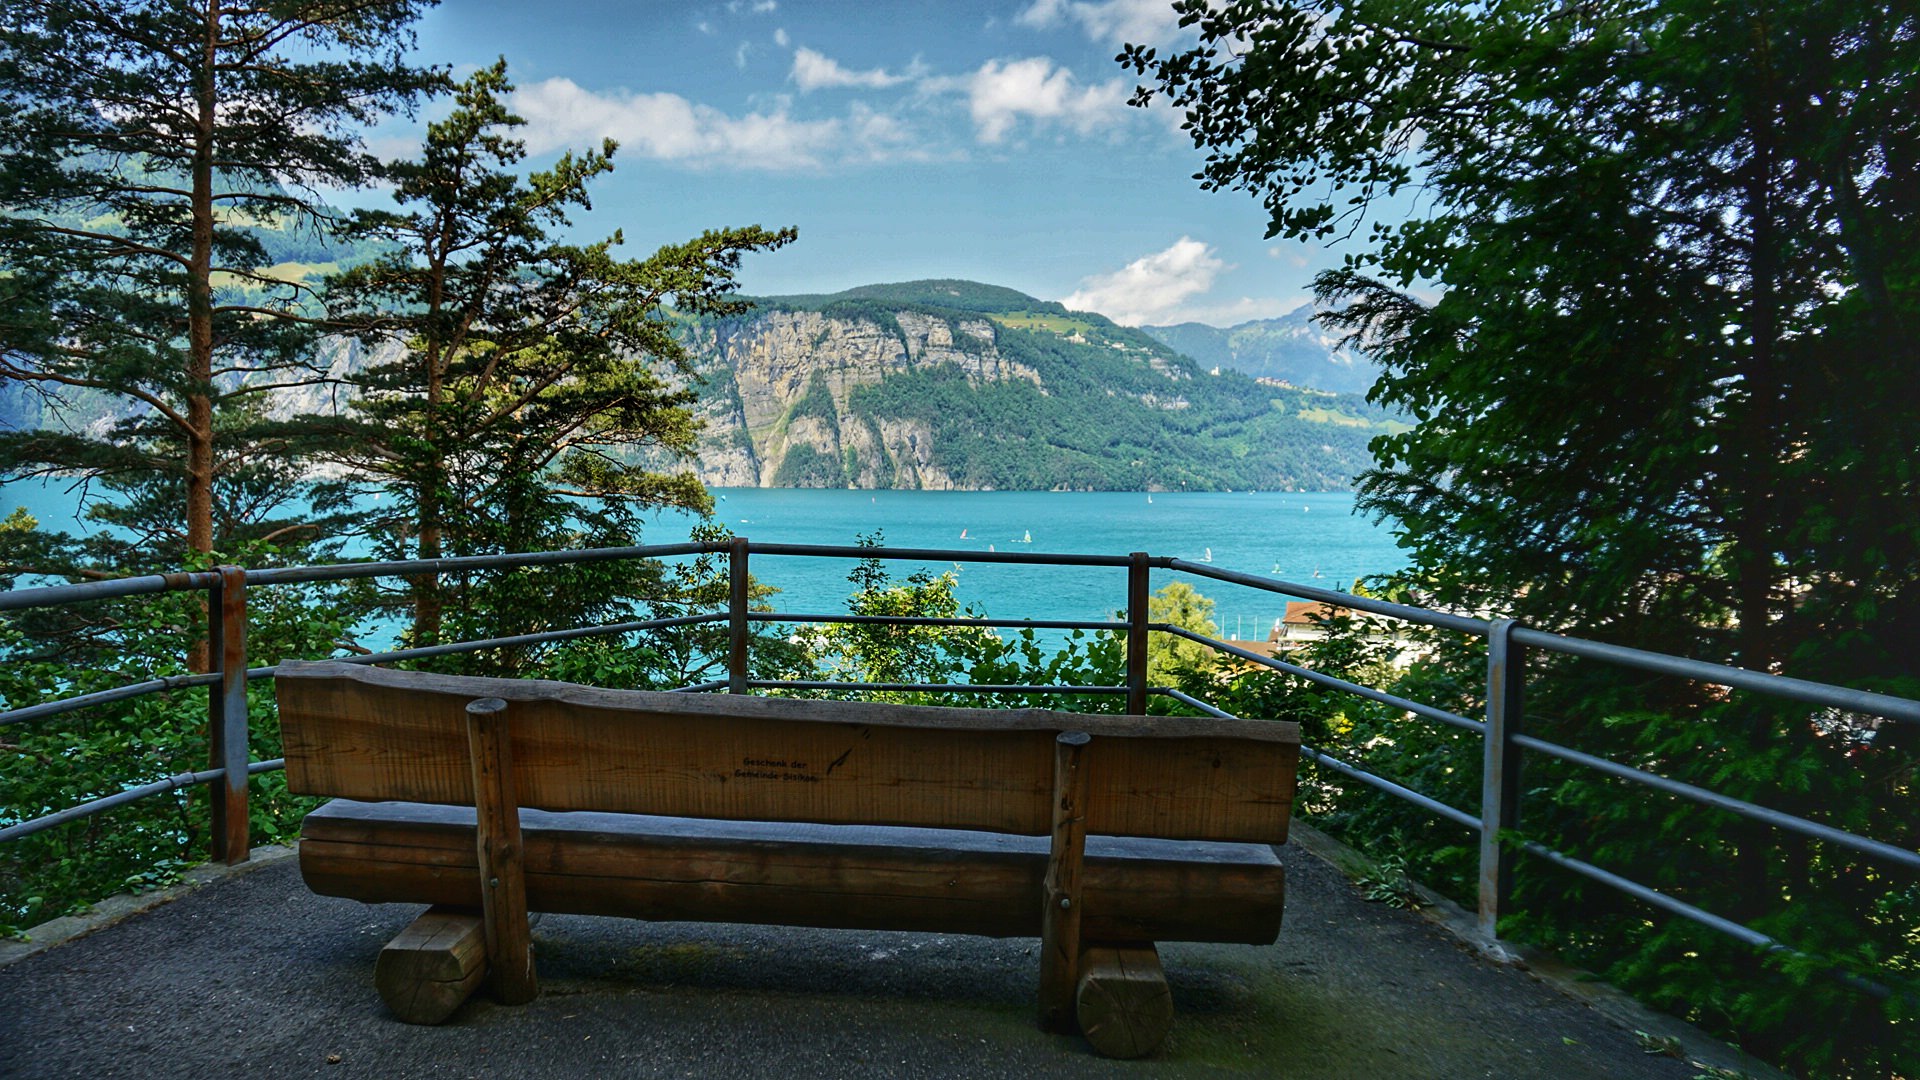 Perfect lakeside hike in Switzerland